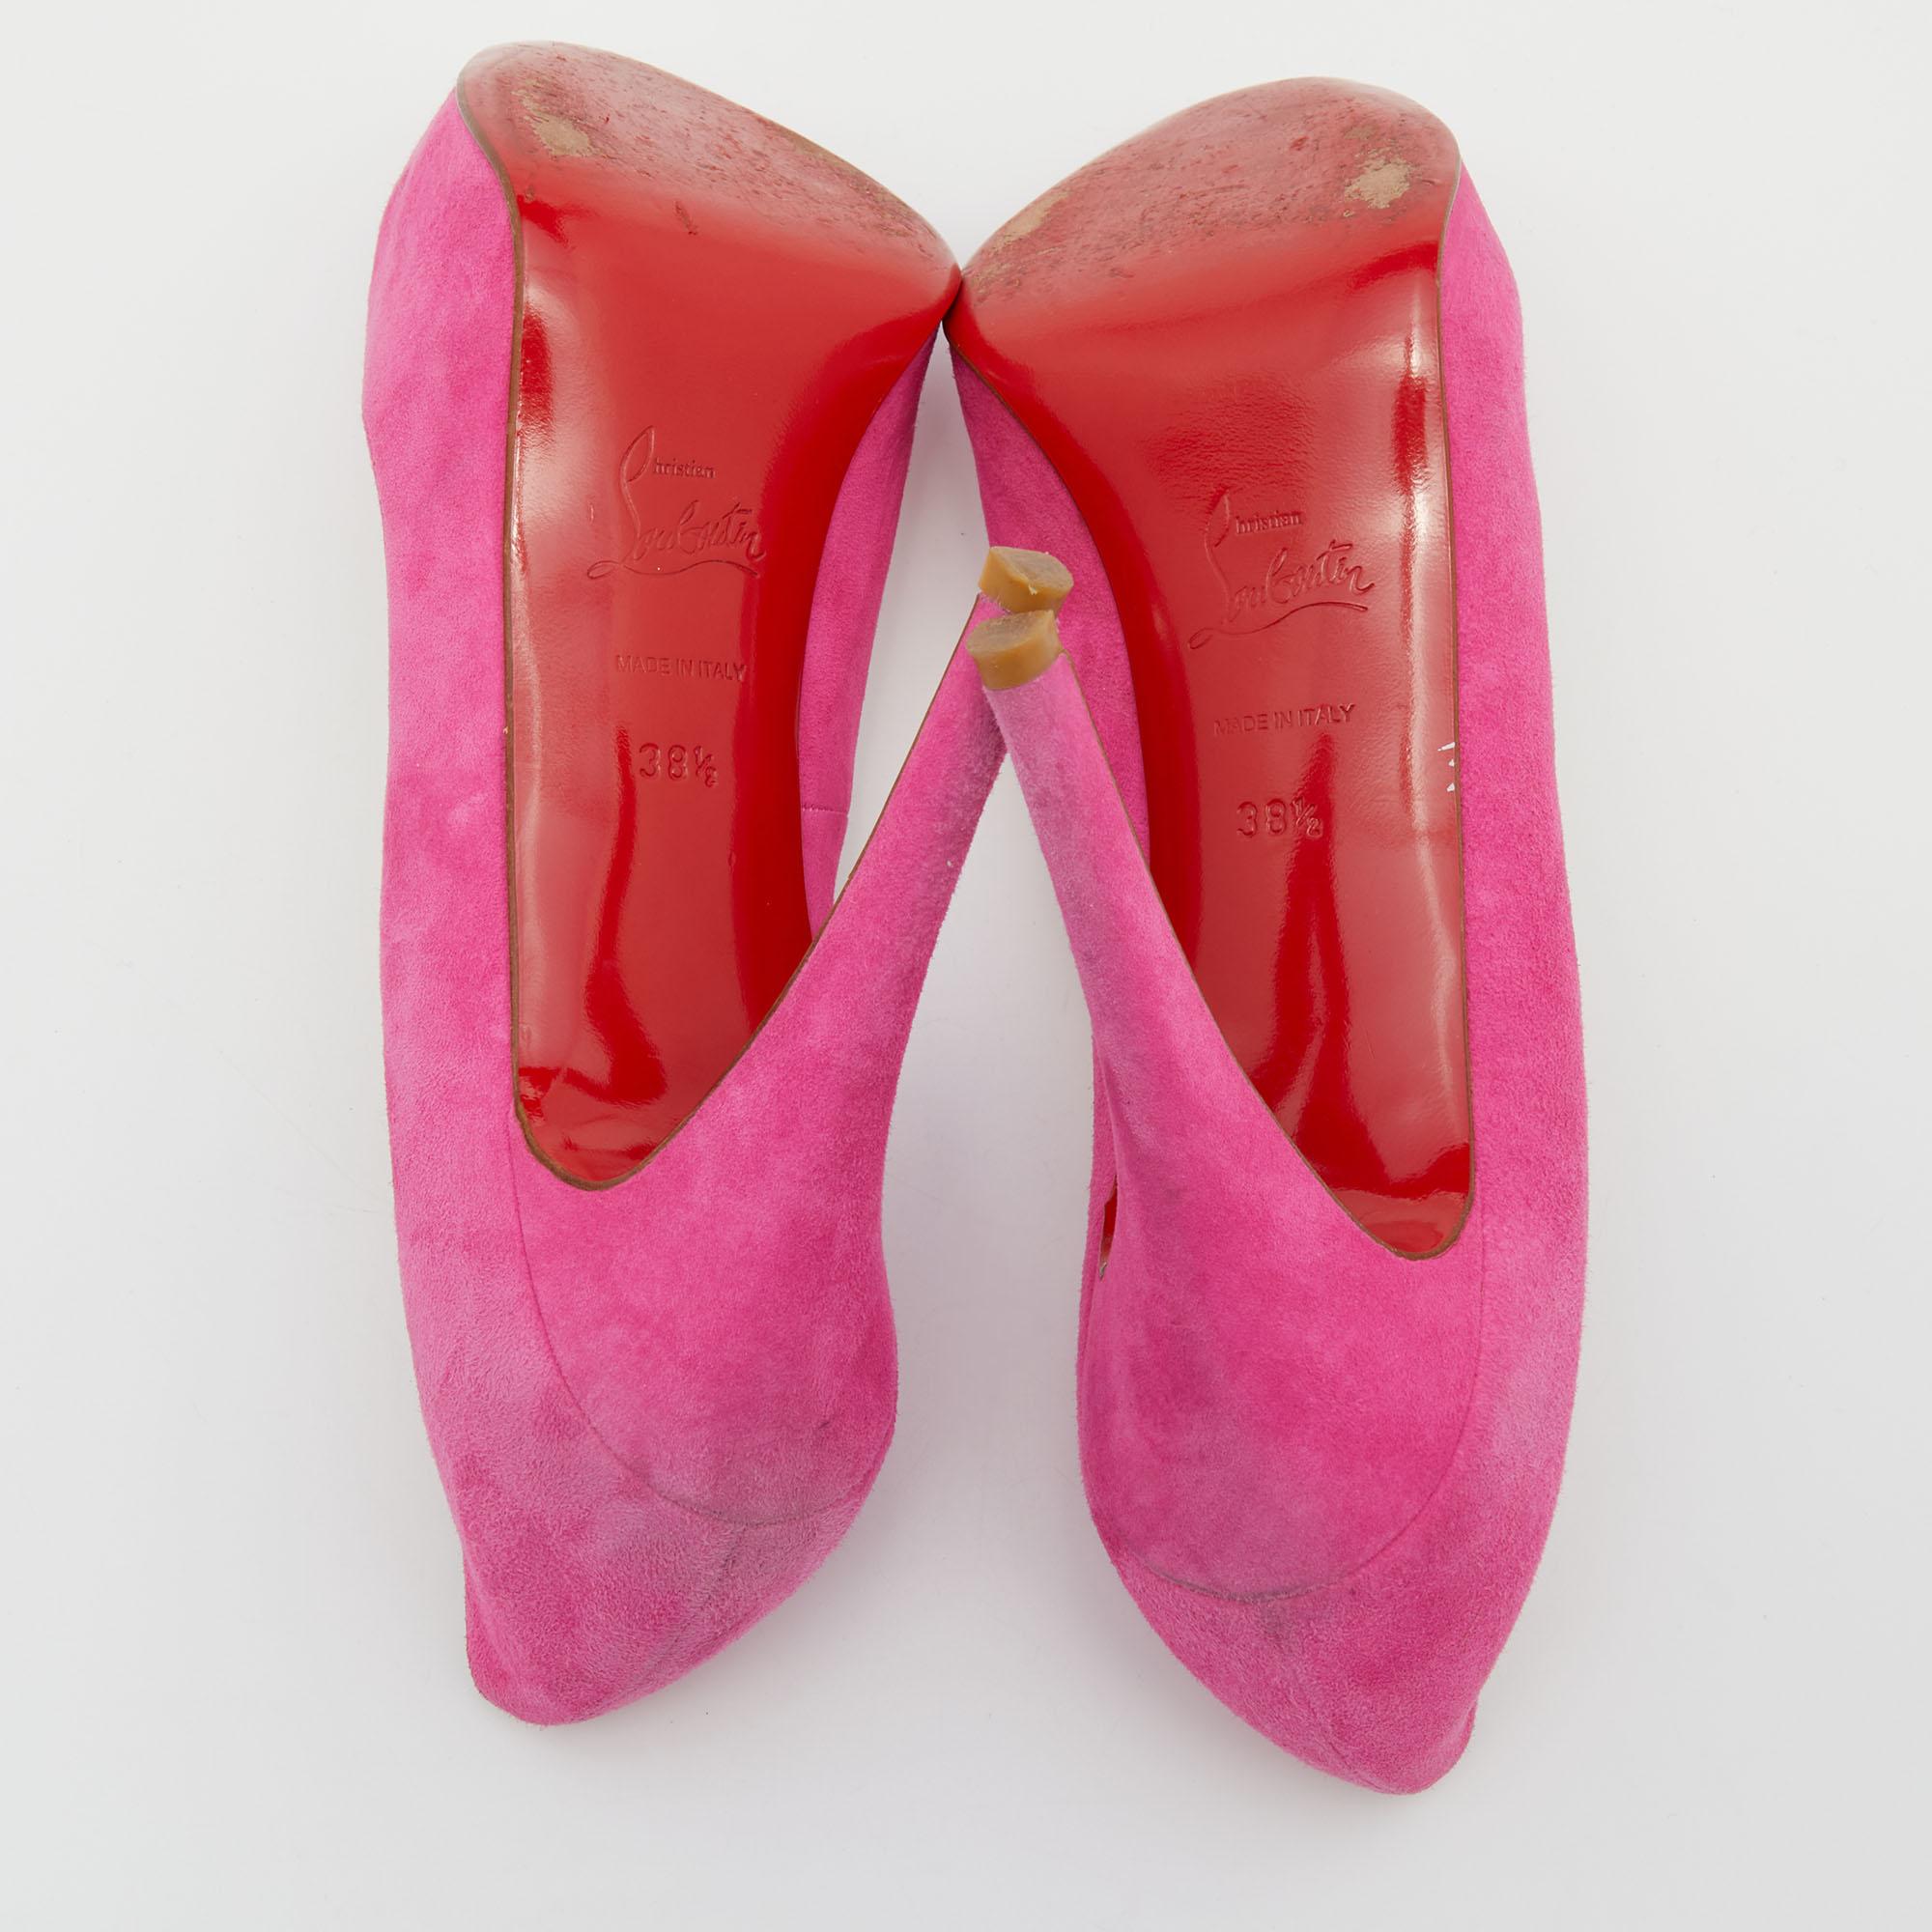 Christian Louboutin Pink Suede Hyper Prive Peep Toe Platform Pumps Size 38.5 1